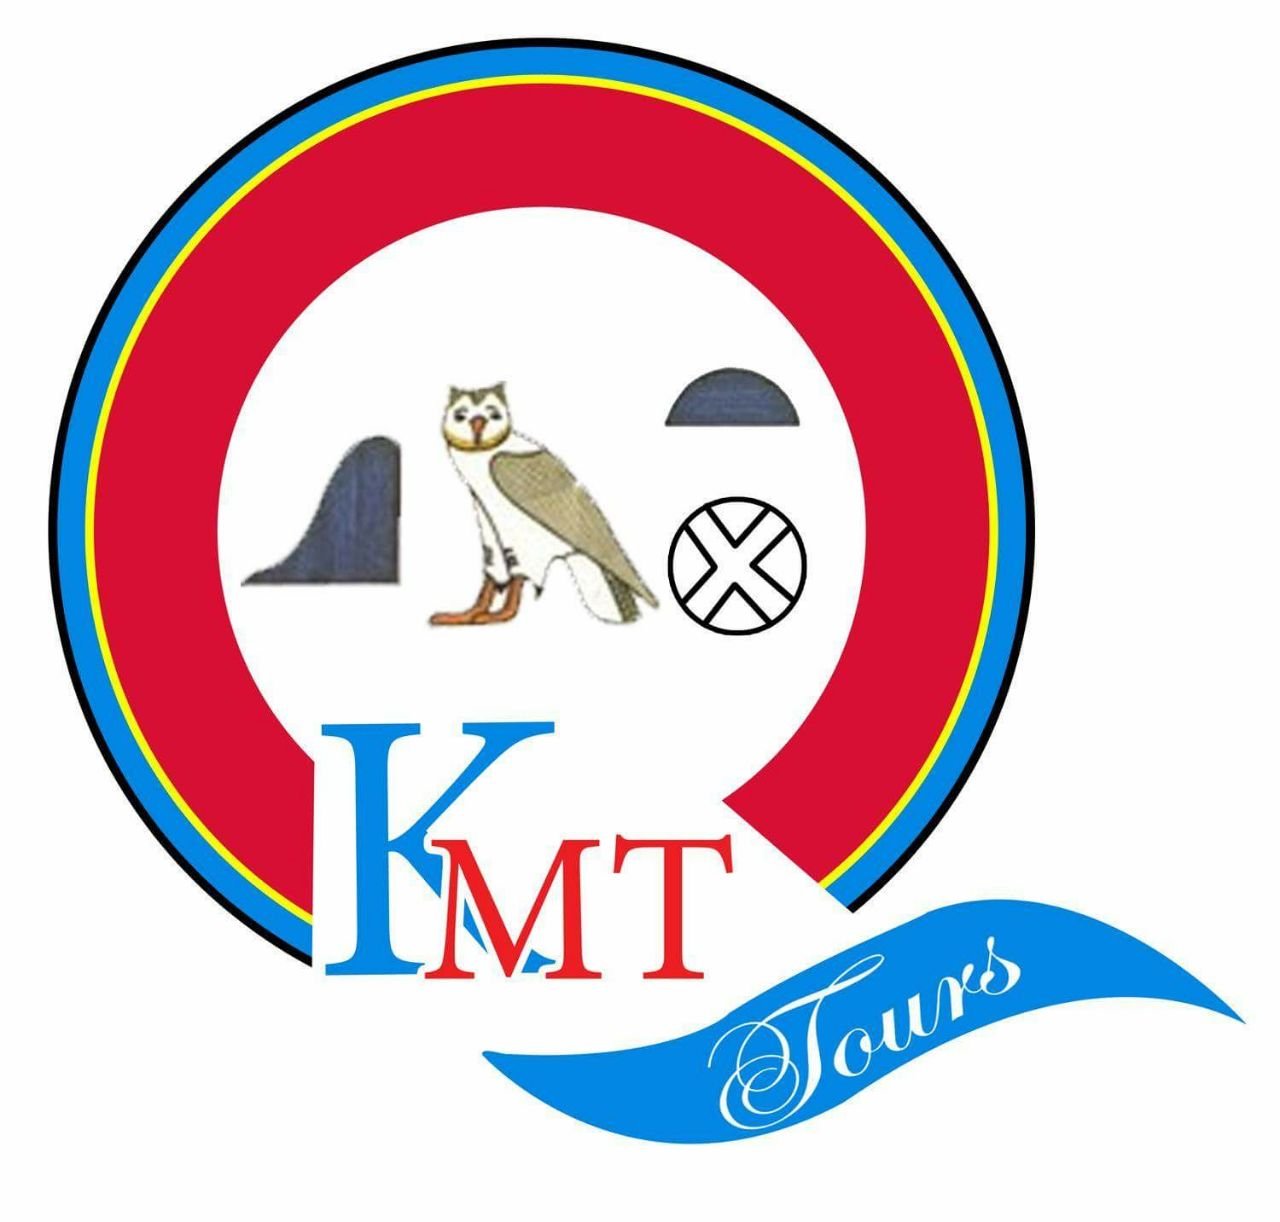 ‏‎#KMT ‎#TOURS
‎#شركه ‎#كميت ‎#للسياحه ‎#الرحلات
‎#حجز ‎#فنادق  ‎#حجز ‎#طيران ‎#نقل ‎#سياحي
  ‎#رحلات ‎#سفاري